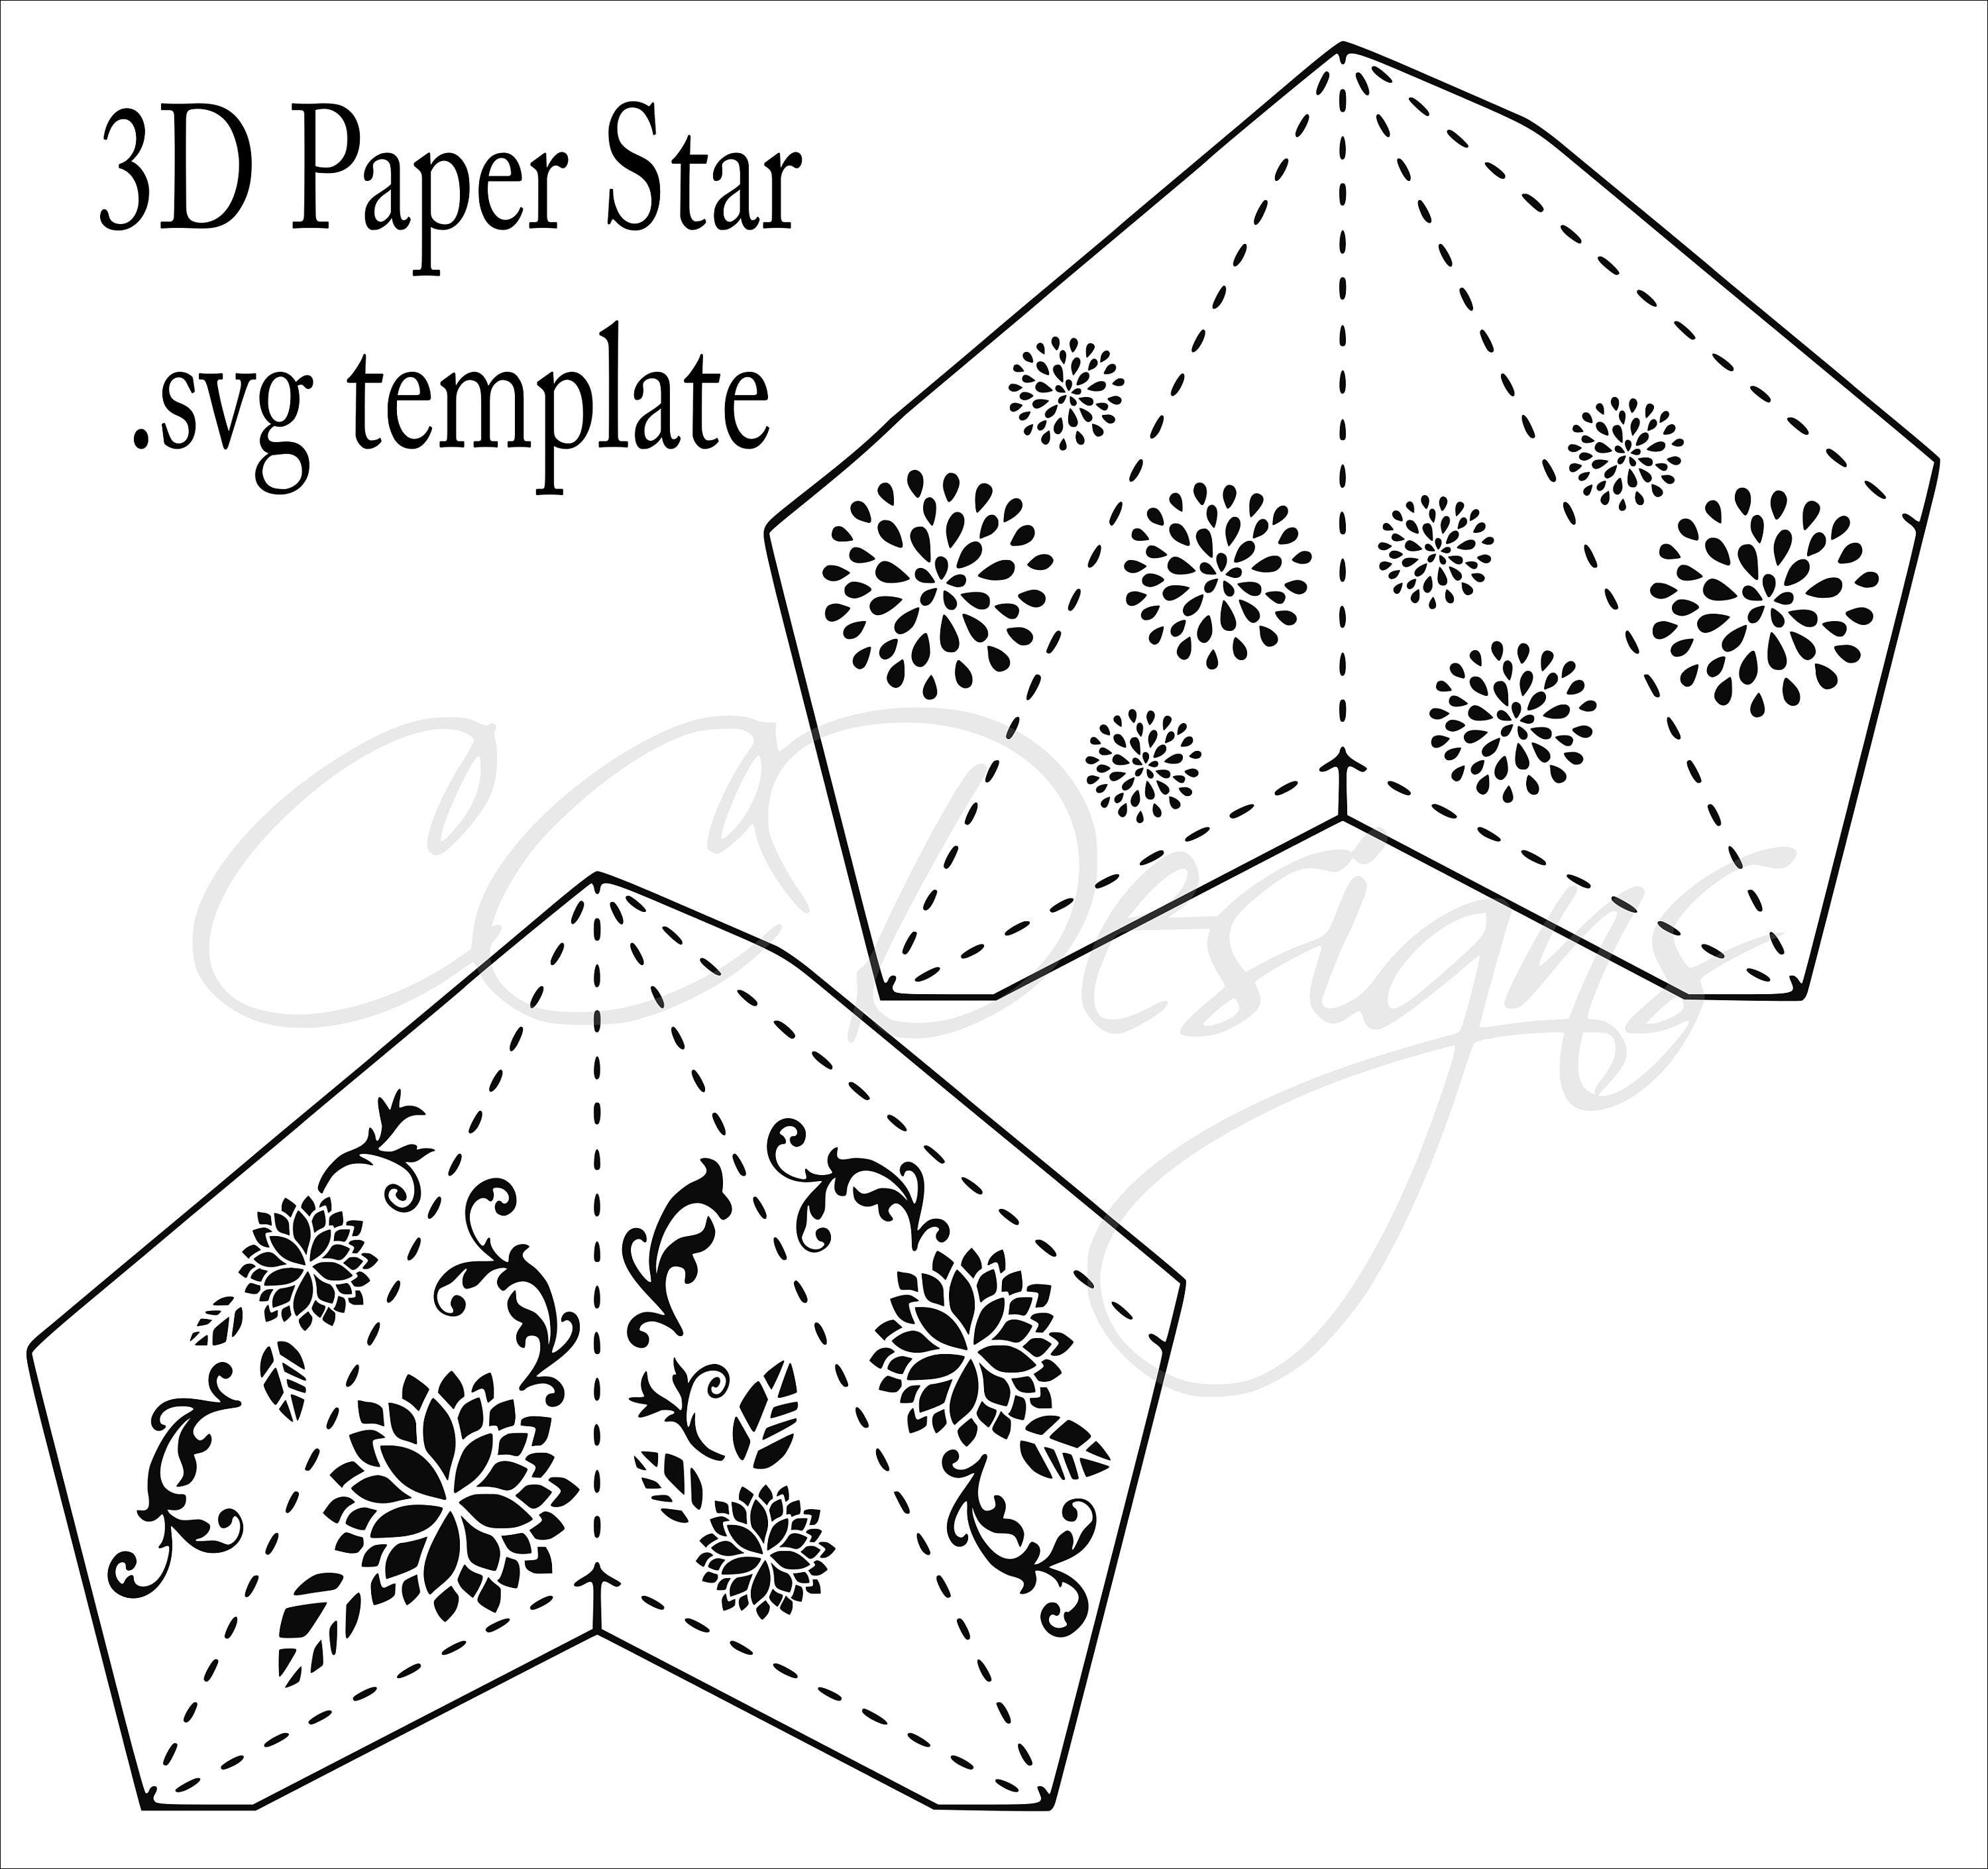 Paper Star Lantern SVG Cut Files, DIY 3D Paper Stars, Paper Decor